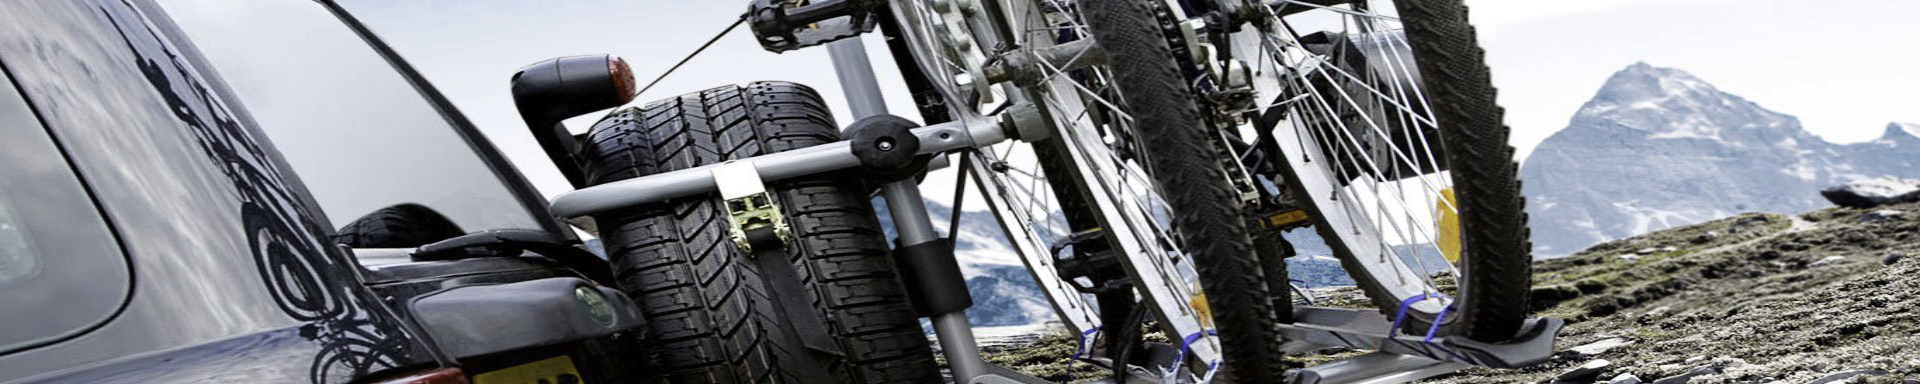 Spare Tire Mount Bike Racks | GarageAndFab.com | Munro Industries gf-100103040305